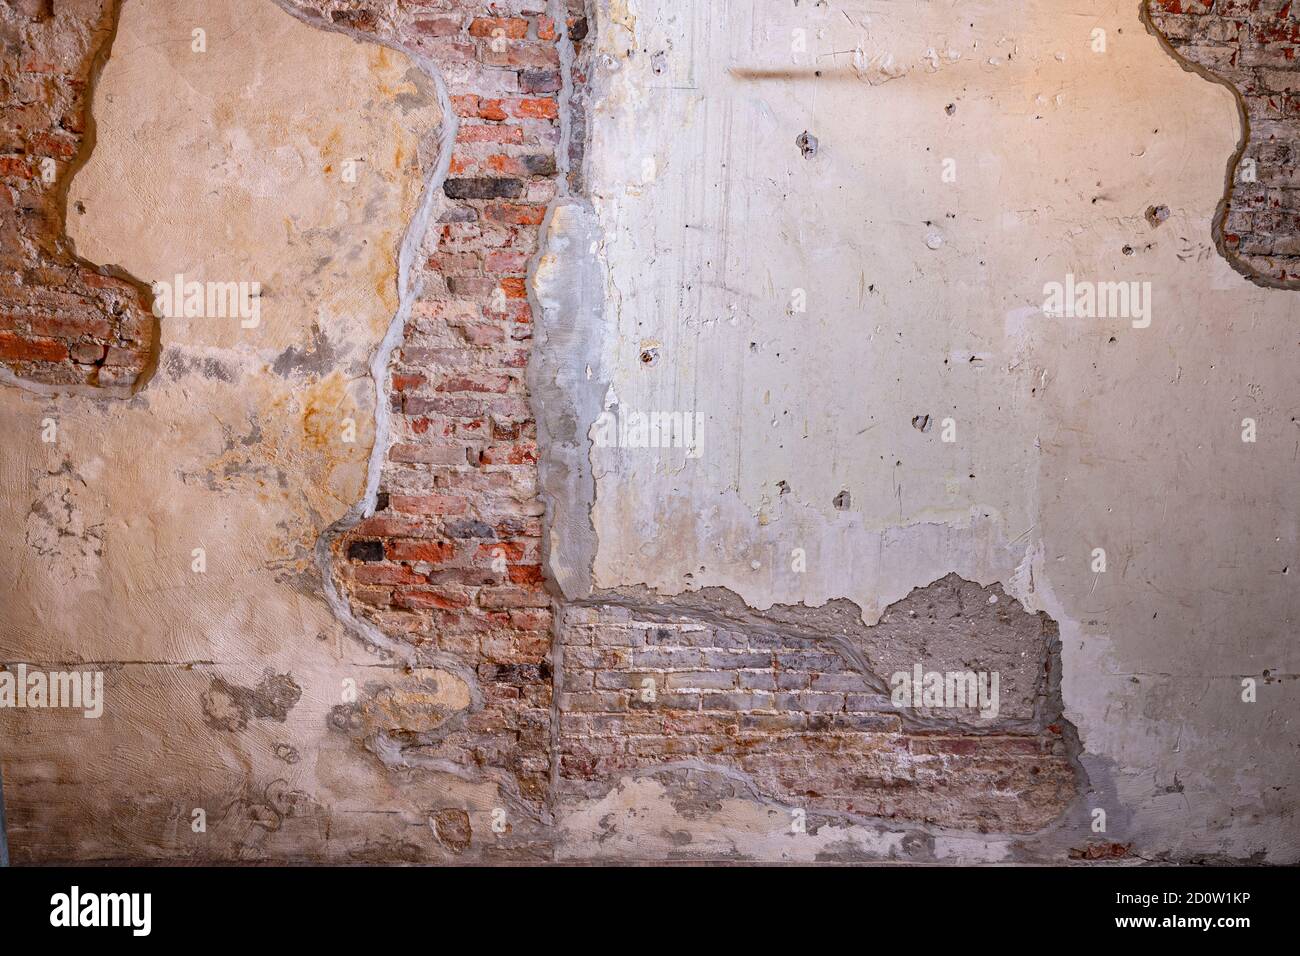 Exposed brick, crumbling plaster on decaying wall, Philadelphia, USA Stock Photo